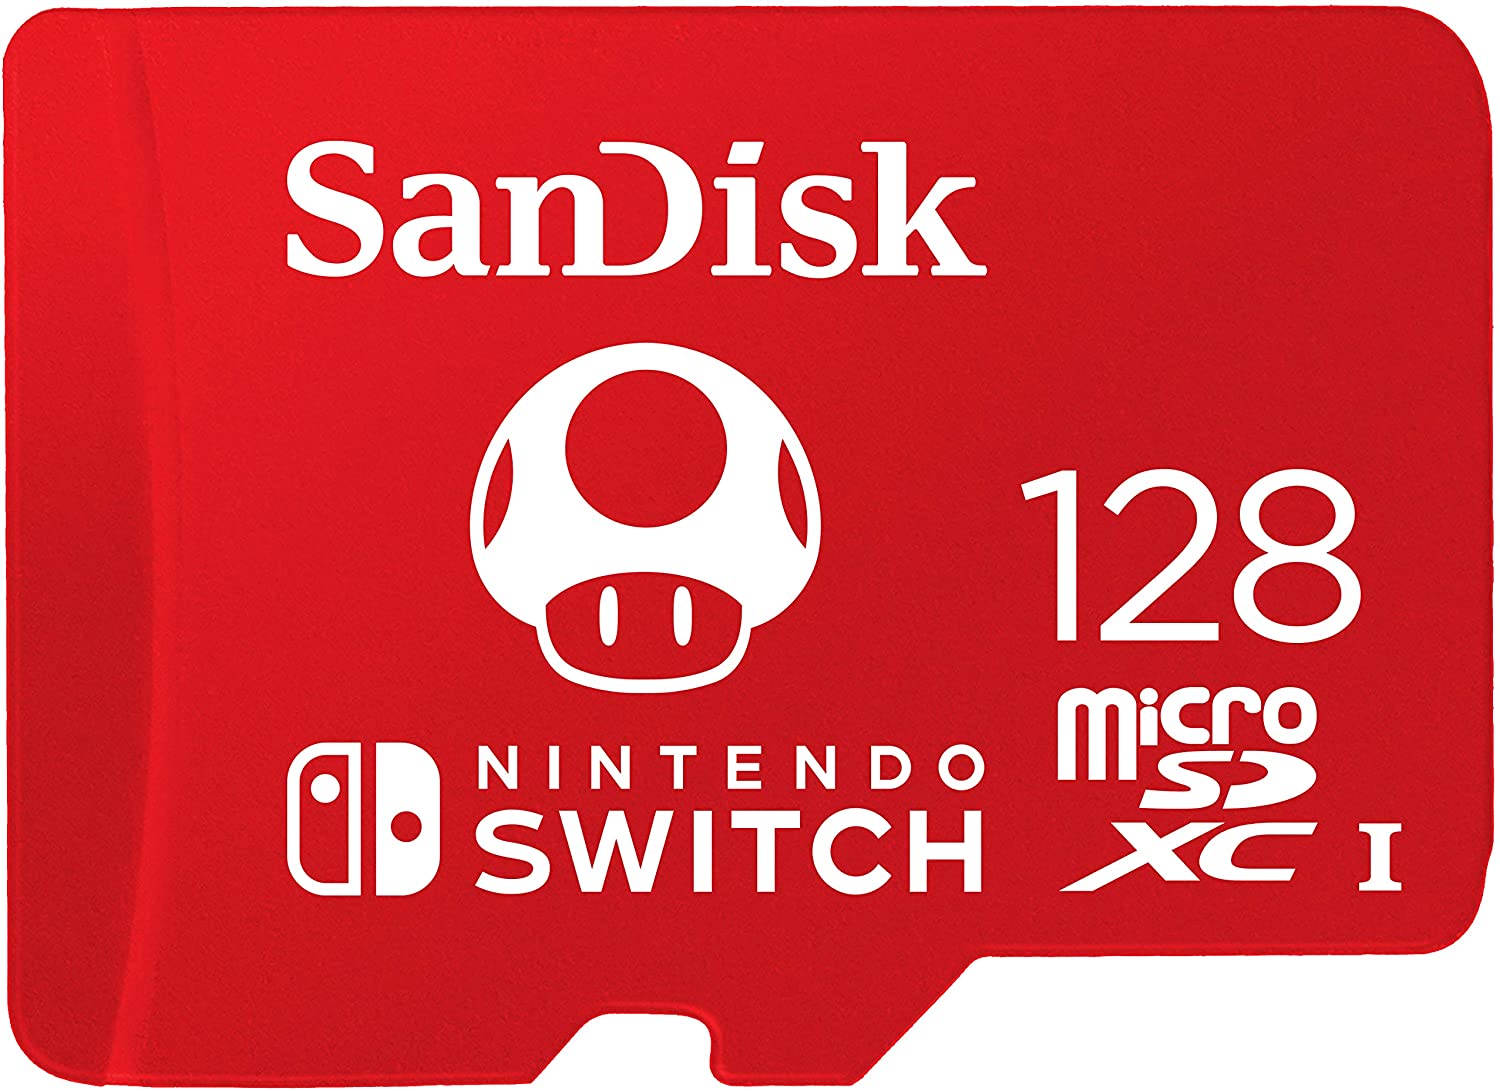 SanDisk microSDXC card for Nintendo Switch - 128GB